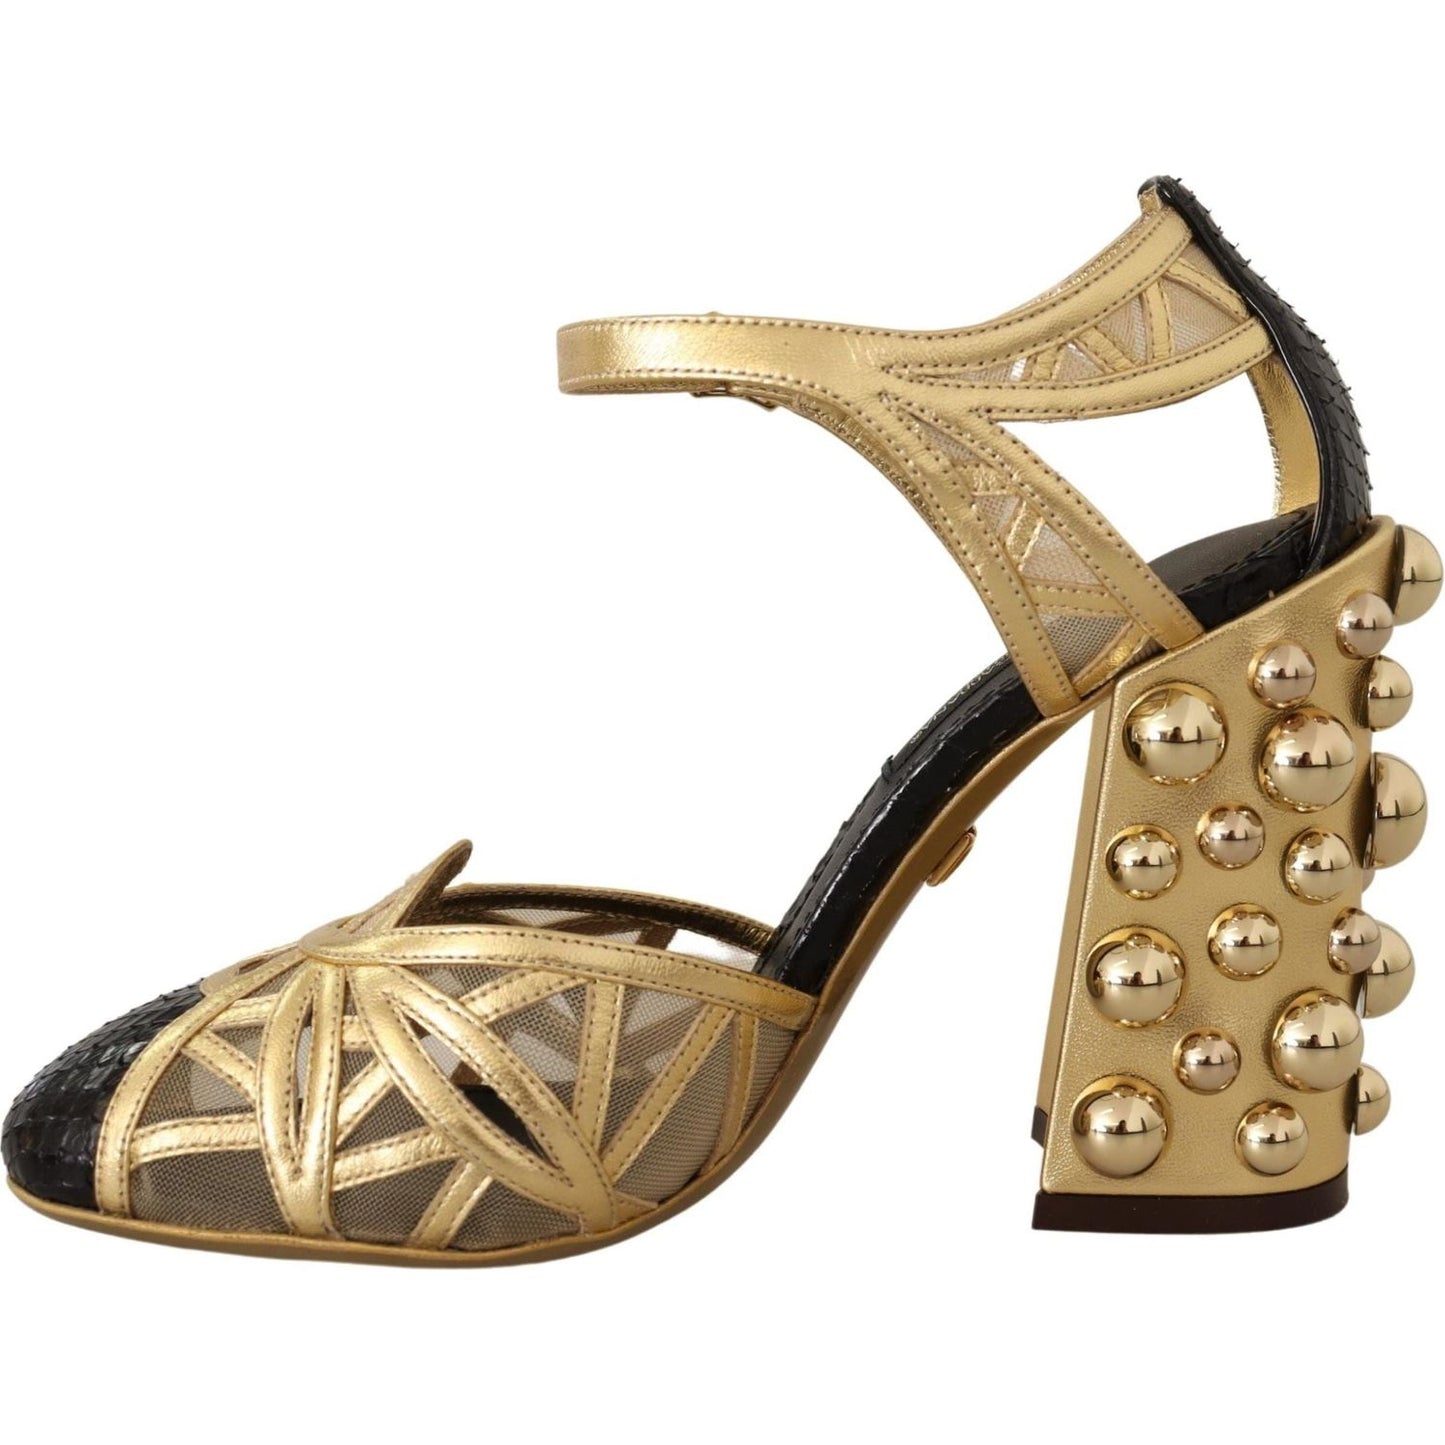 Dolce & Gabbana Elegant Crystal Studded Leather Pumps black-gold-leather-studded-ankle-straps-shoes IMG_5835-scaled-6bc7df28-8d9.jpg